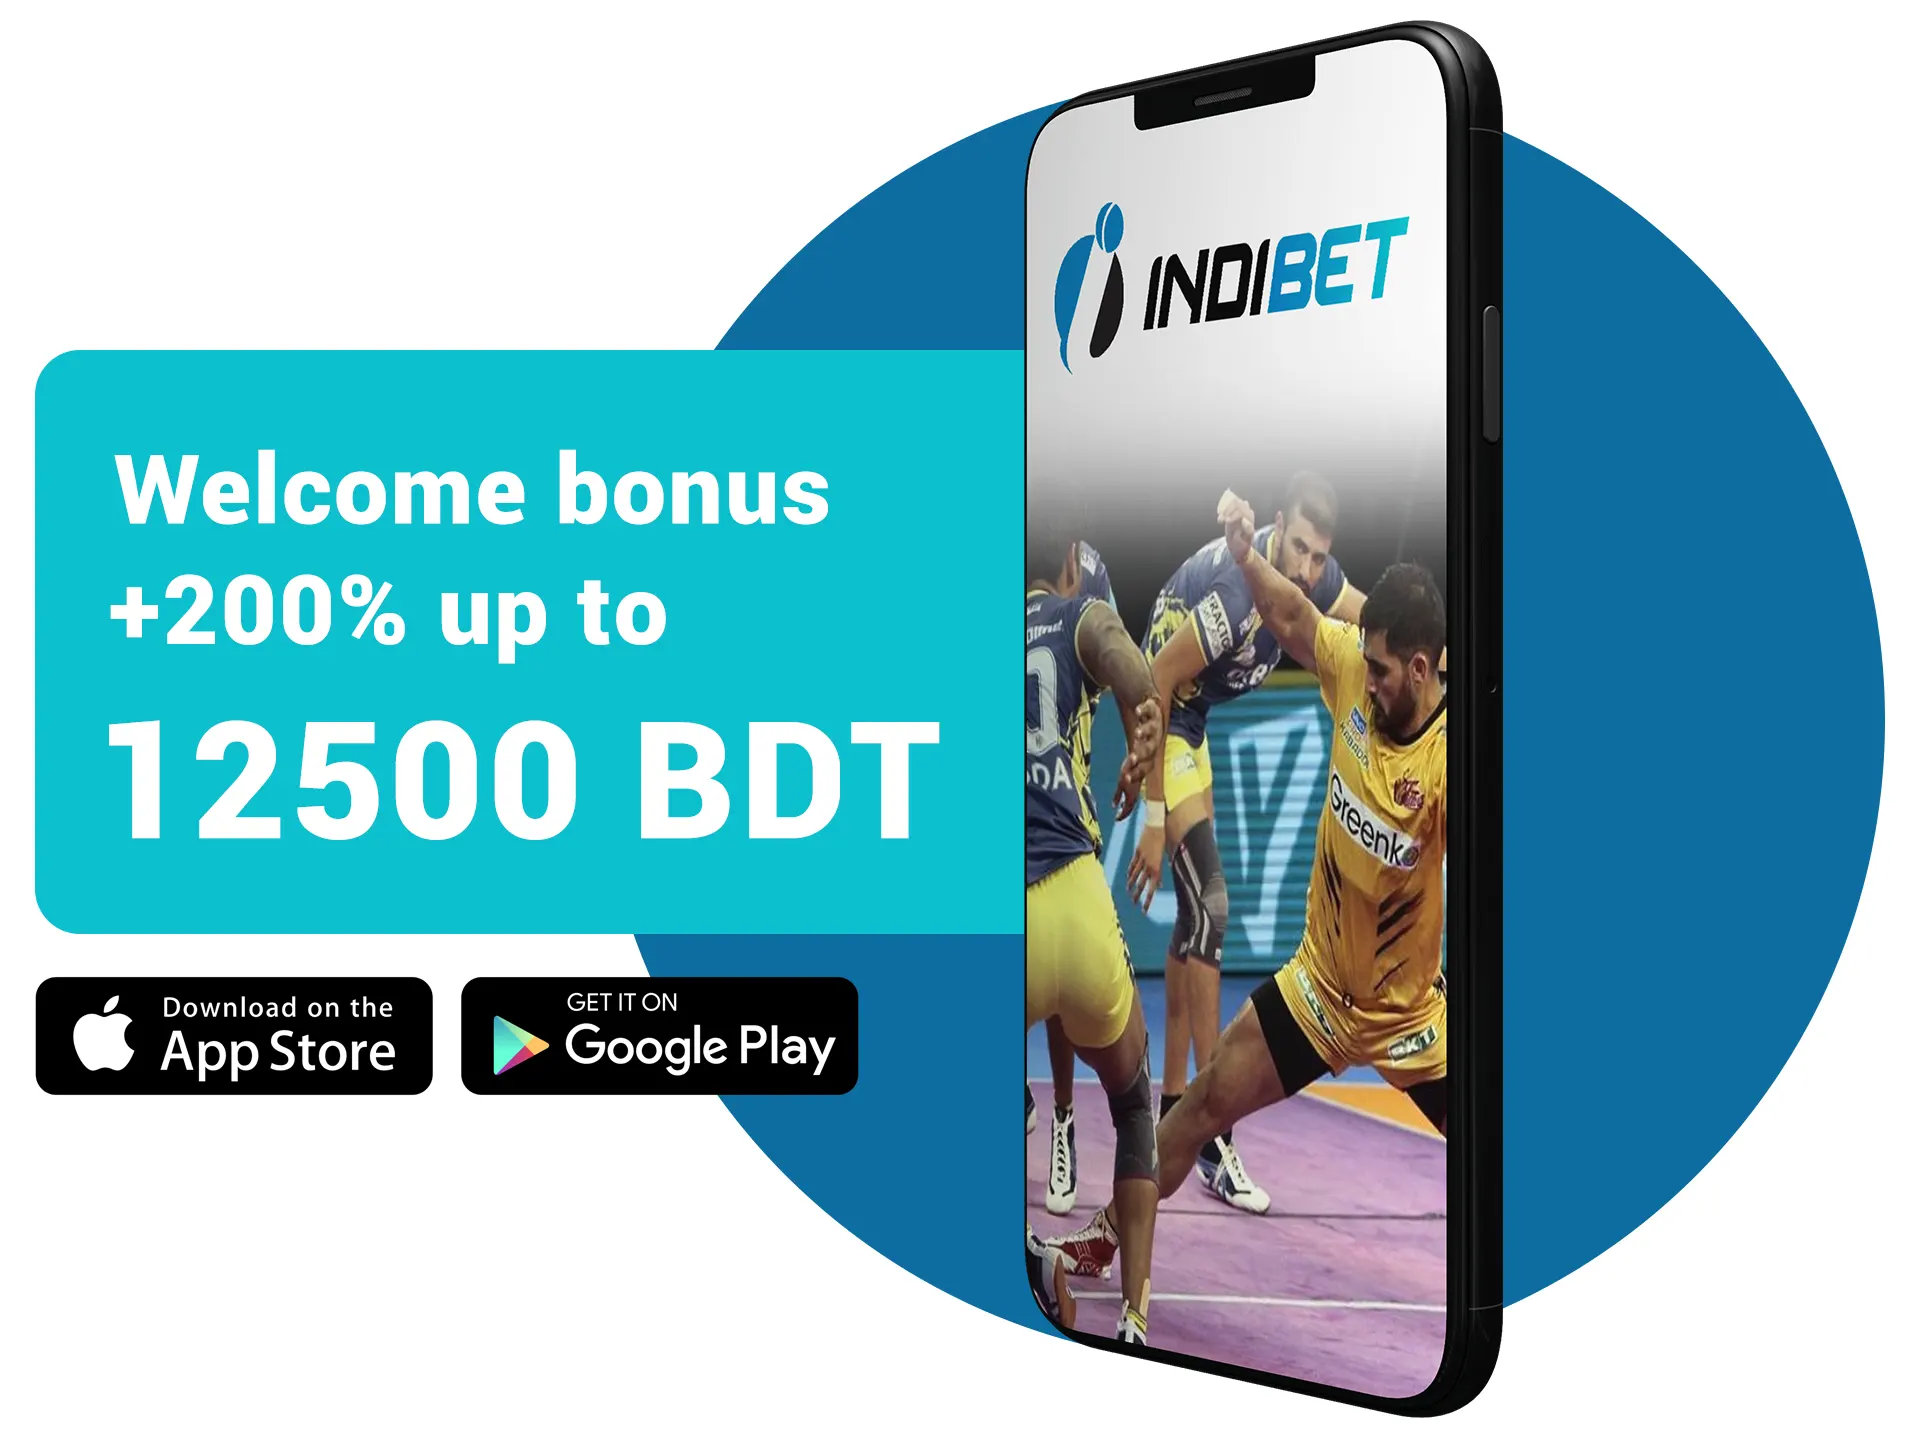 Visit the Indibet website and start betting on Kabaddi matches.